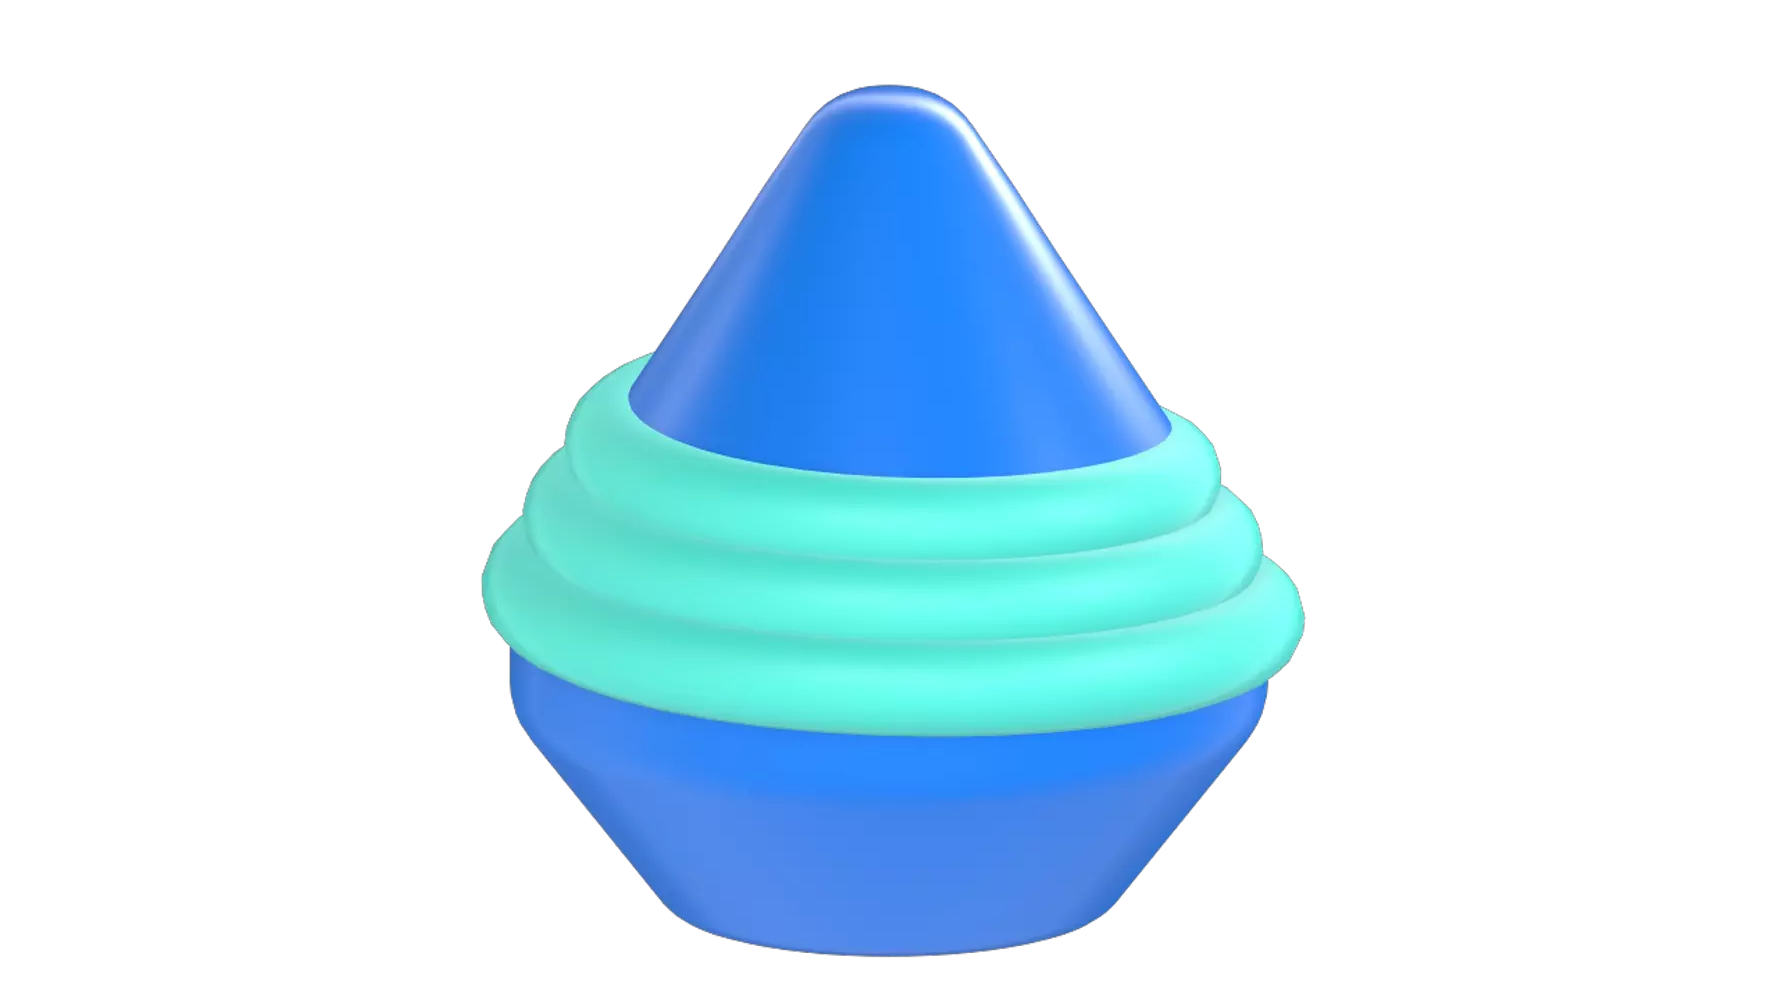 Cone 3D Graphic